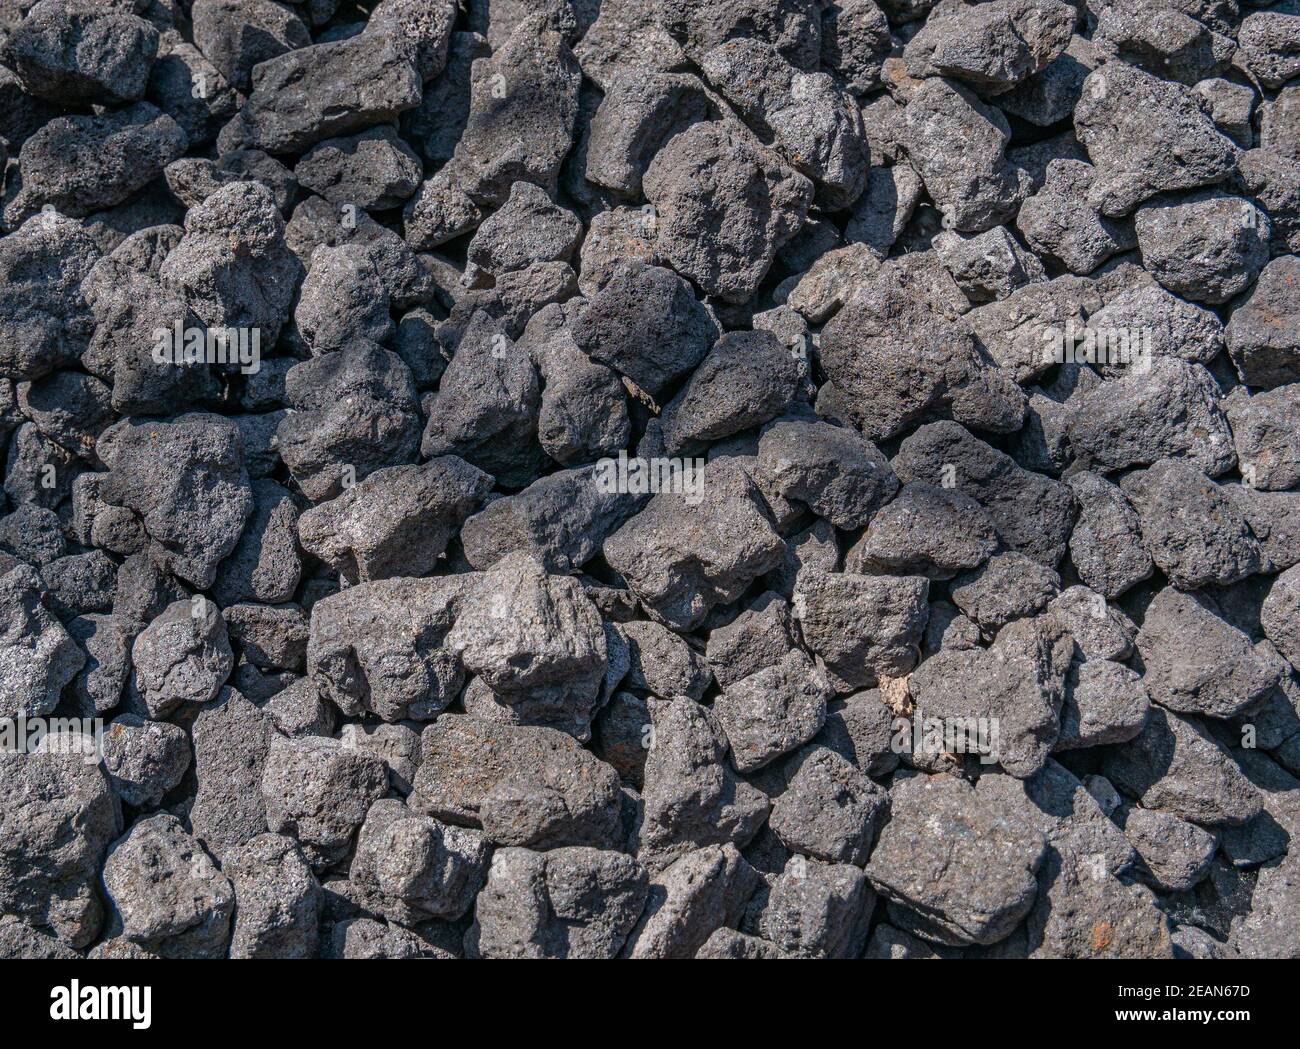 https://c8.alamy.com/comp/2EAN67D/small-lumps-of-hard-coal-on-a-big-pile-2EAN67D.jpg